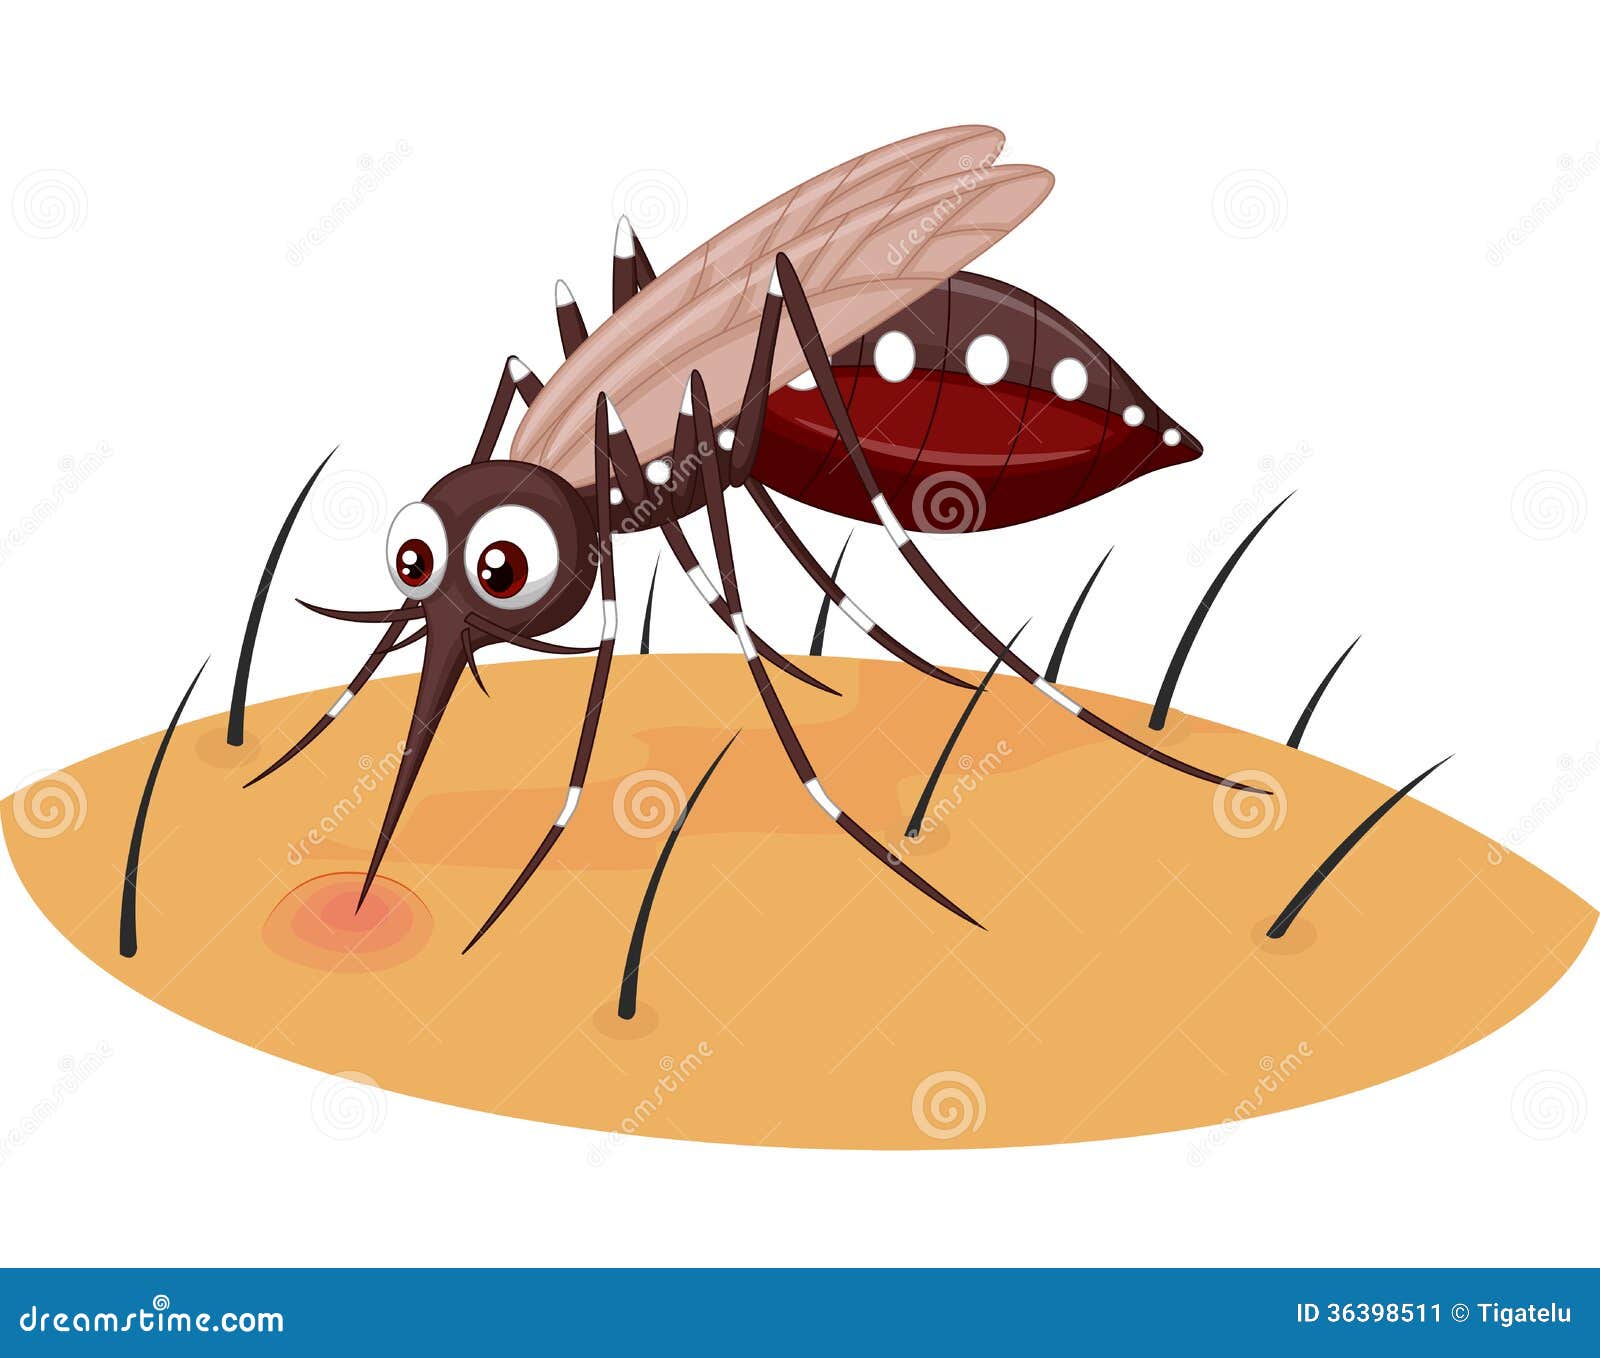 clipart mosquito cartoon - photo #27